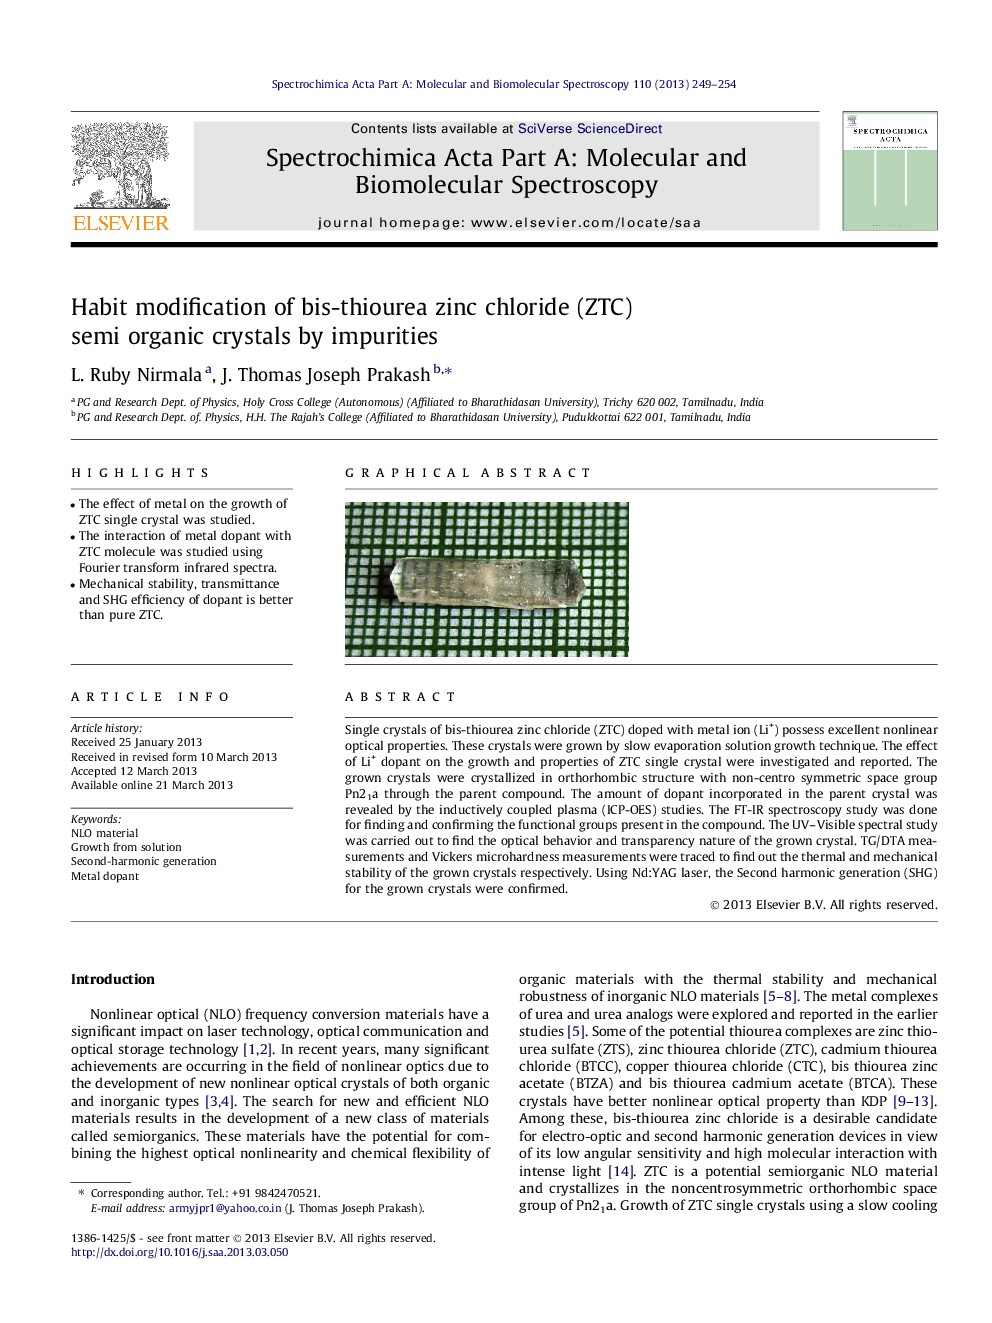 Habit modification of bis-thiourea zinc chloride (ZTC) semi organic crystals by impurities